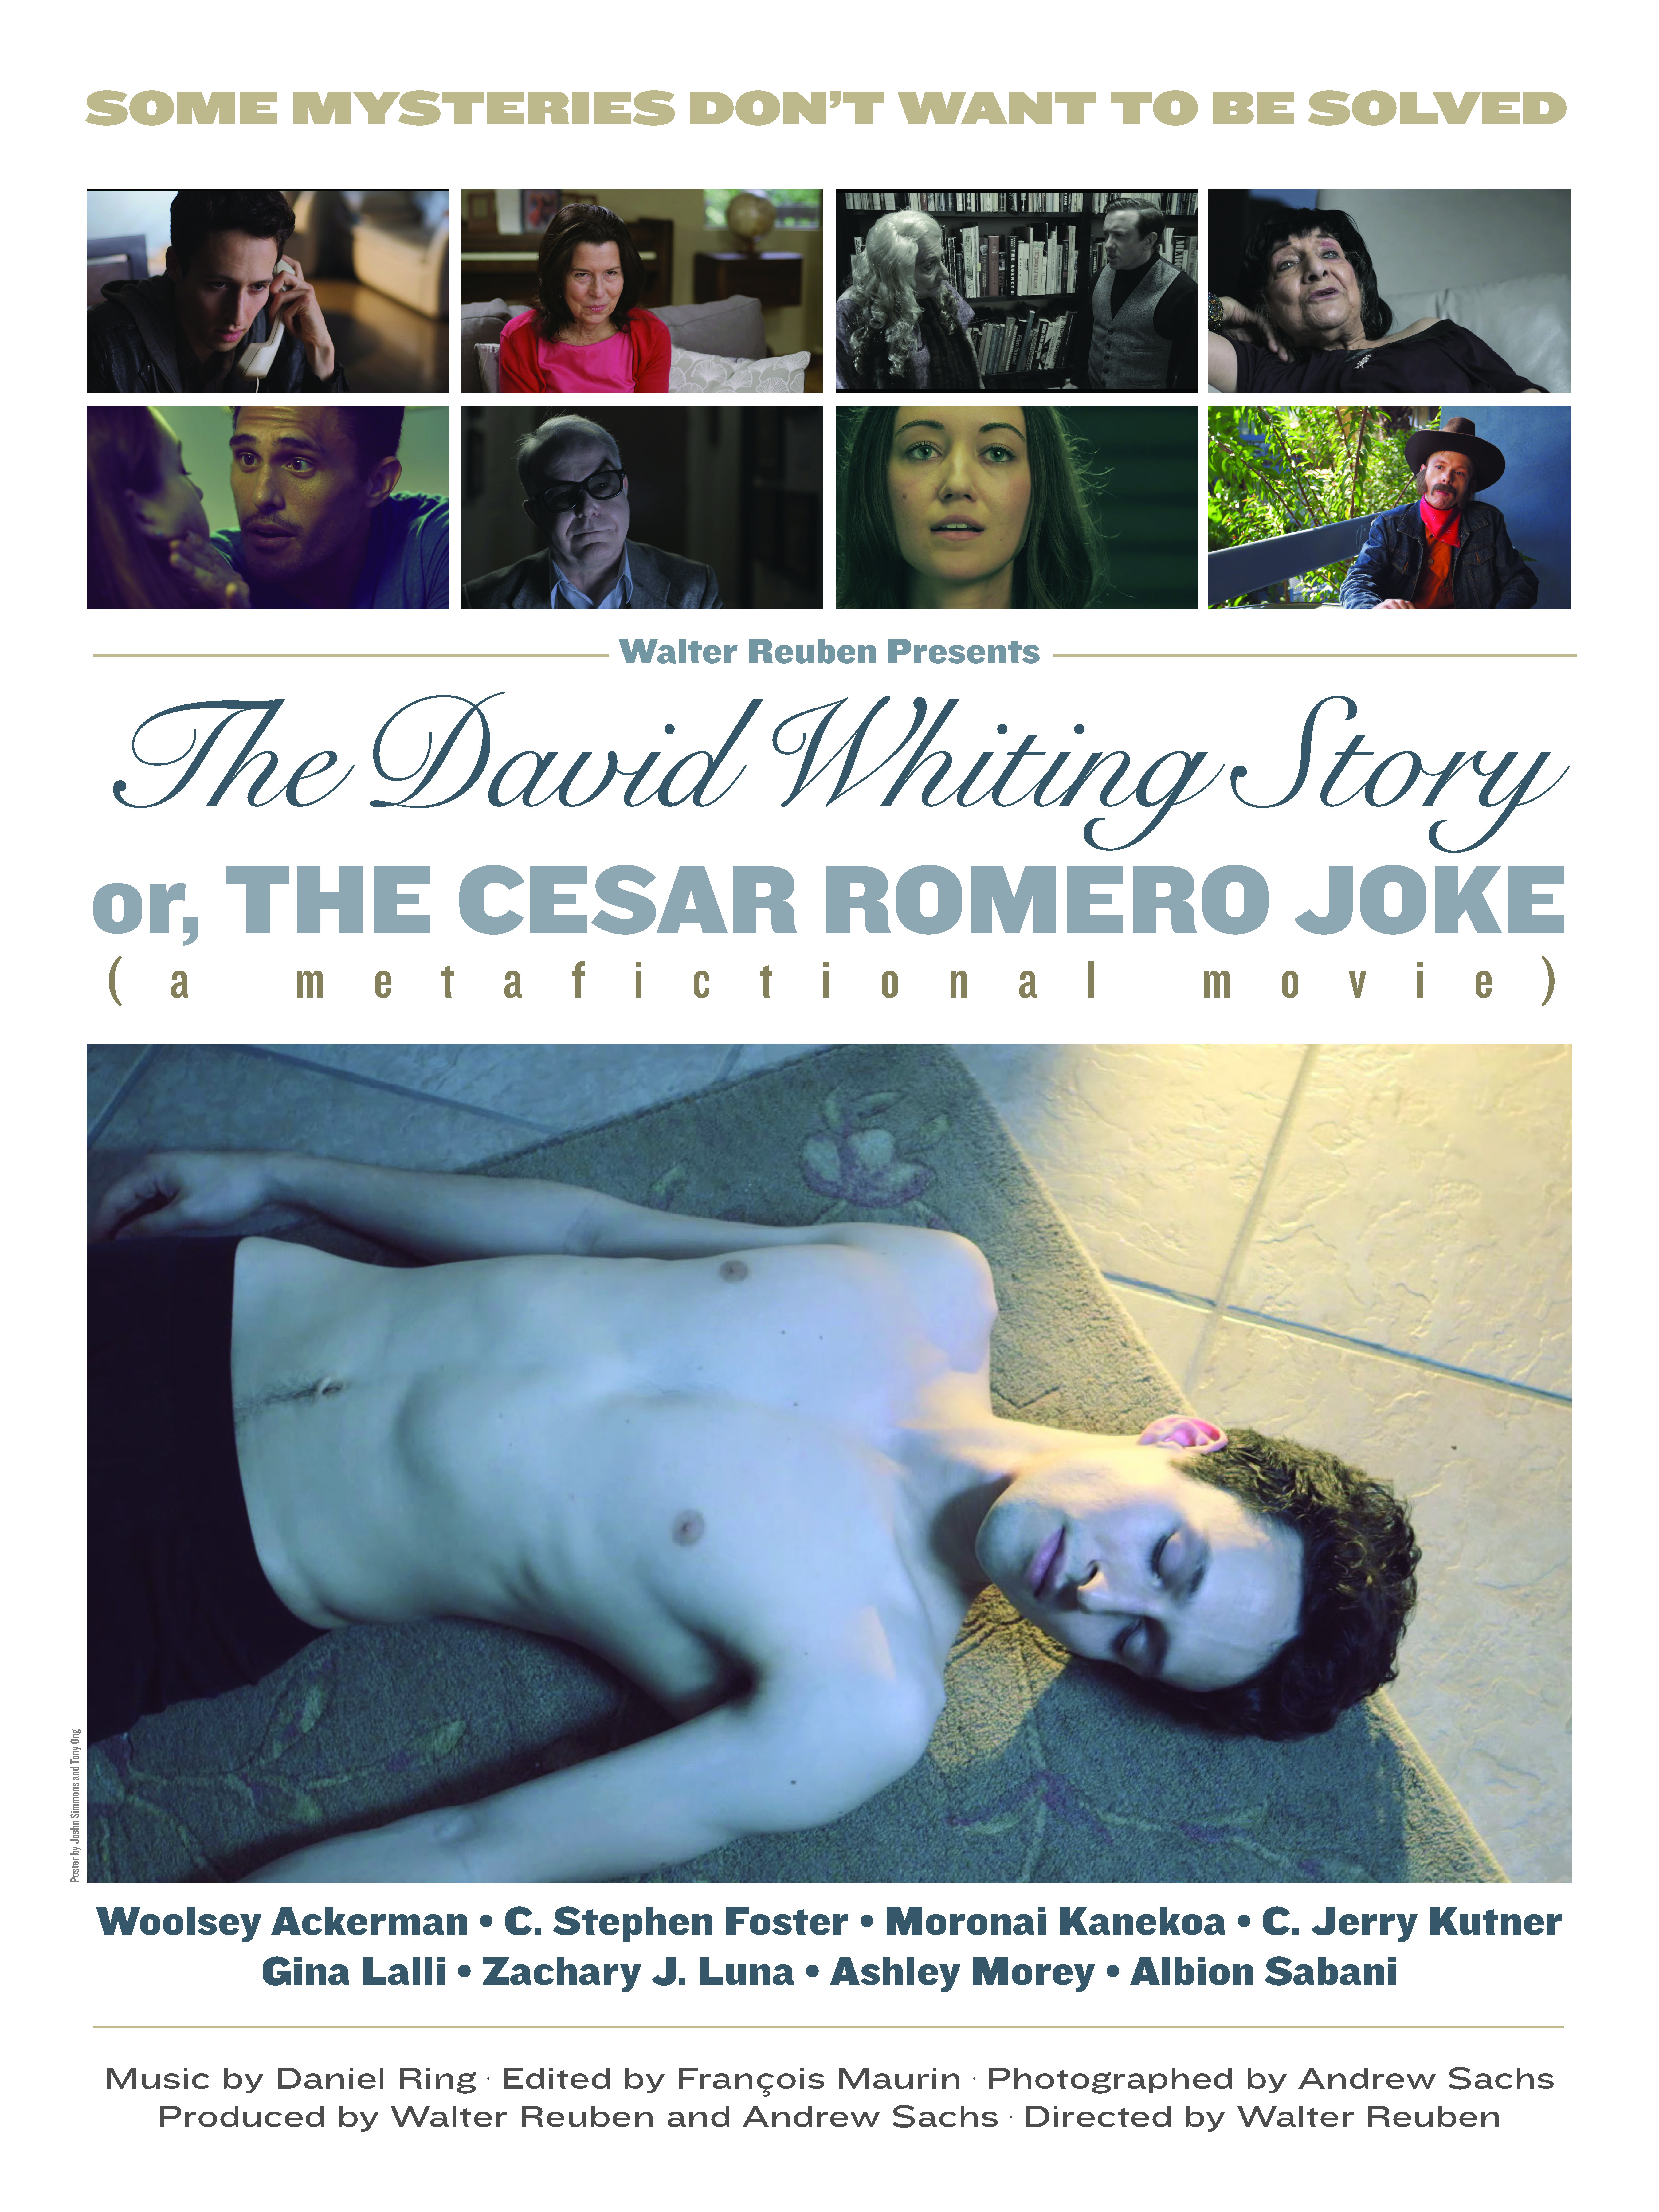 Full title: The David Whiting Story; or, the Cesar Romero Joke (a metafictional movie) (2014)